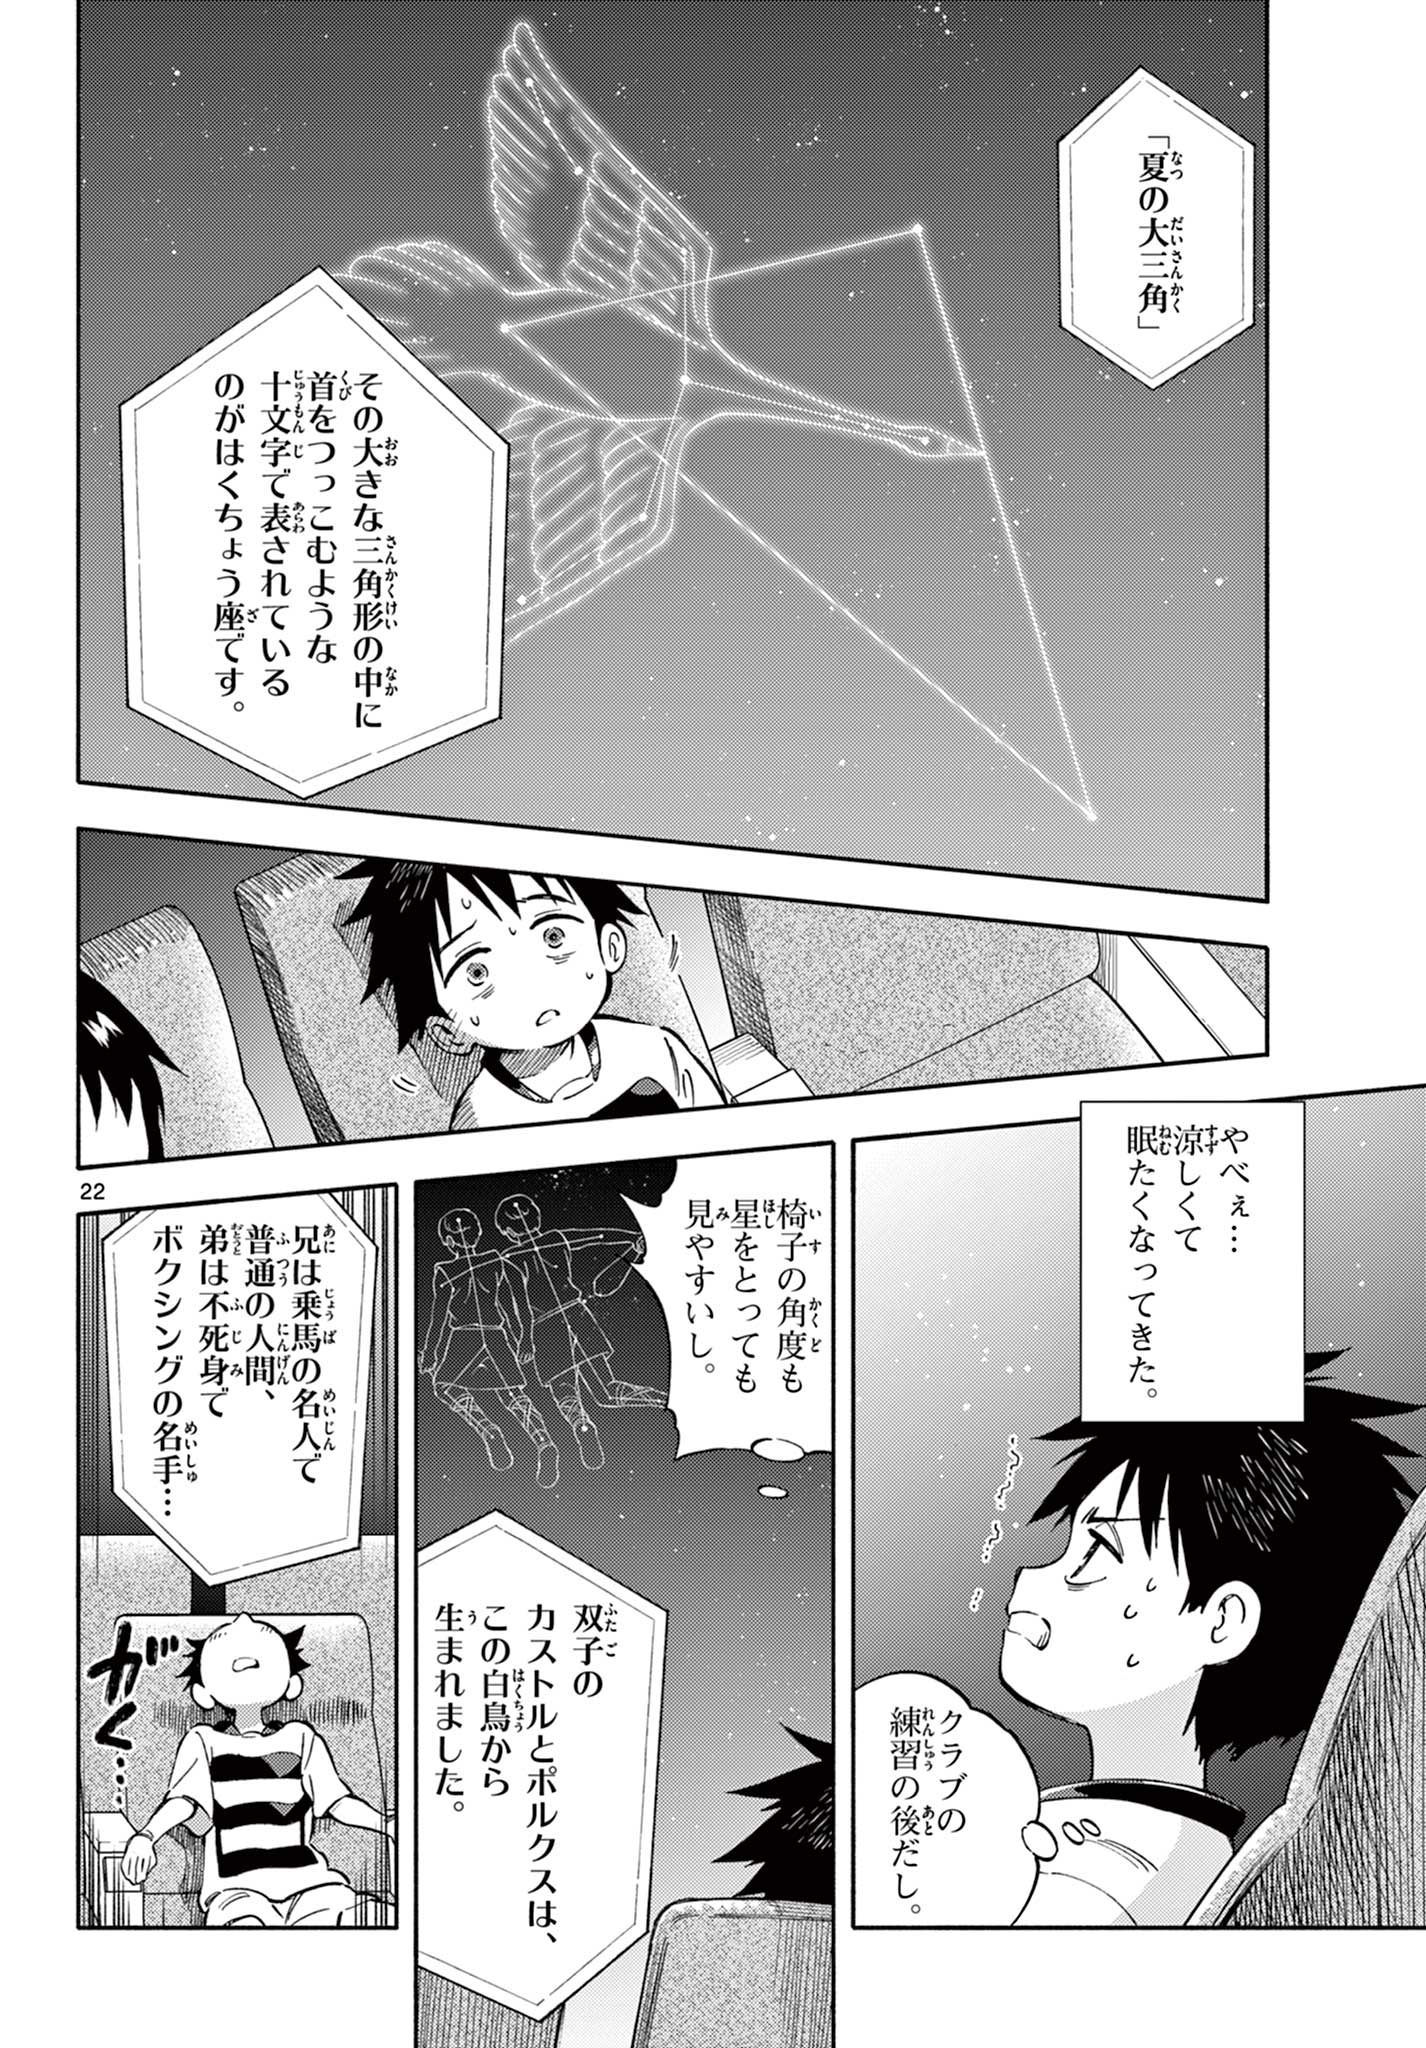 Nami no Shijima no Horizont - Chapter 15.2 - Page 7